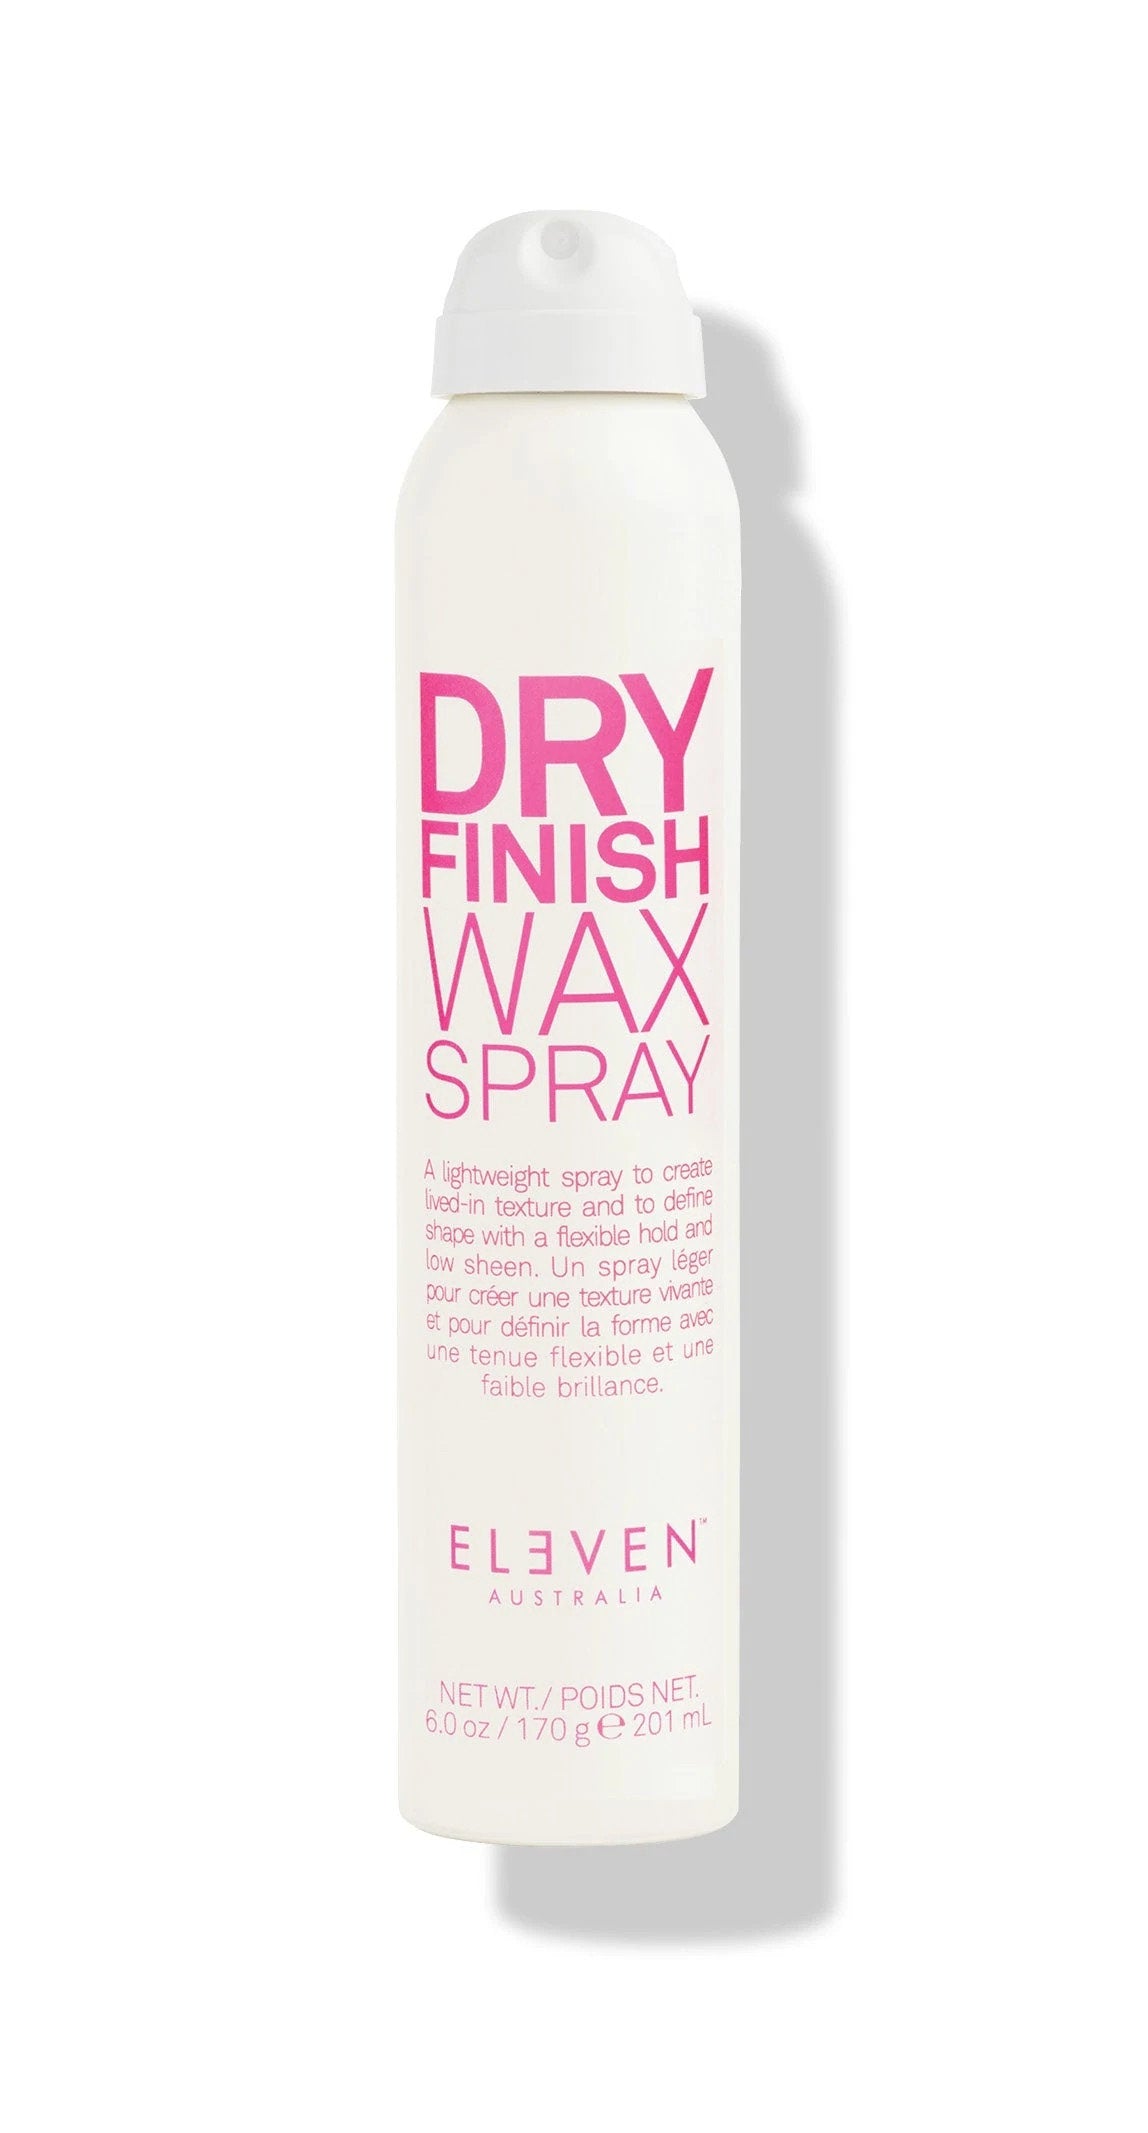 Eleven Australia dry finish wax spray